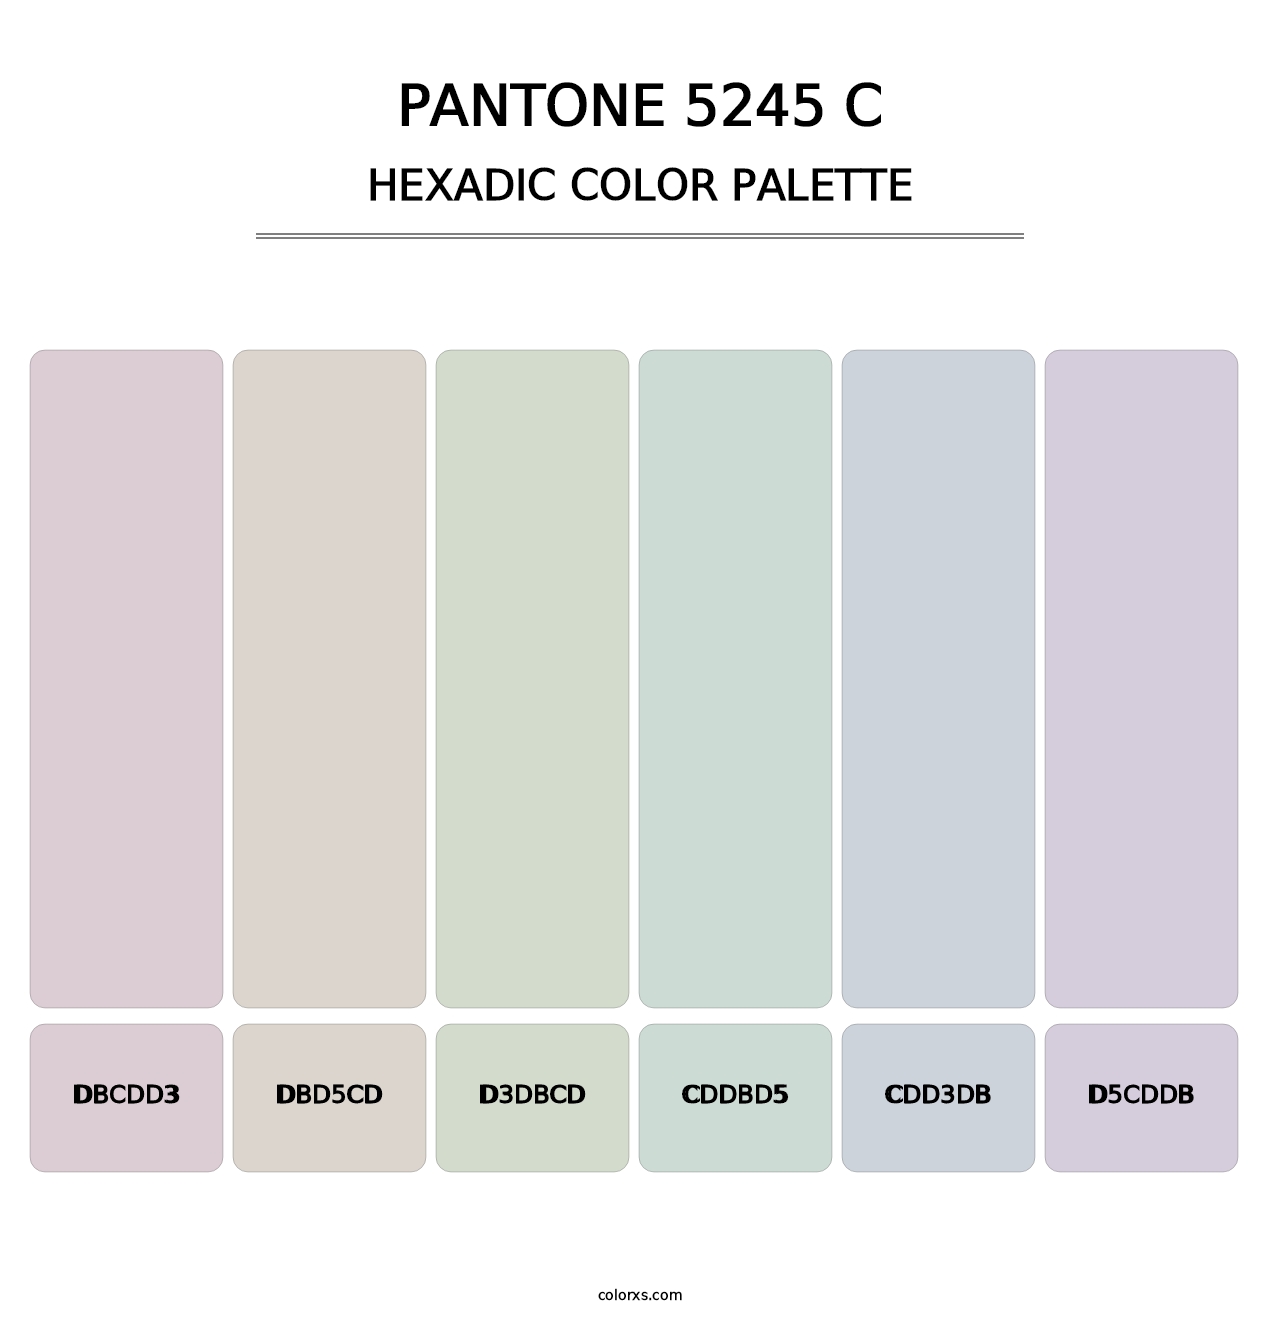 PANTONE 5245 C - Hexadic Color Palette